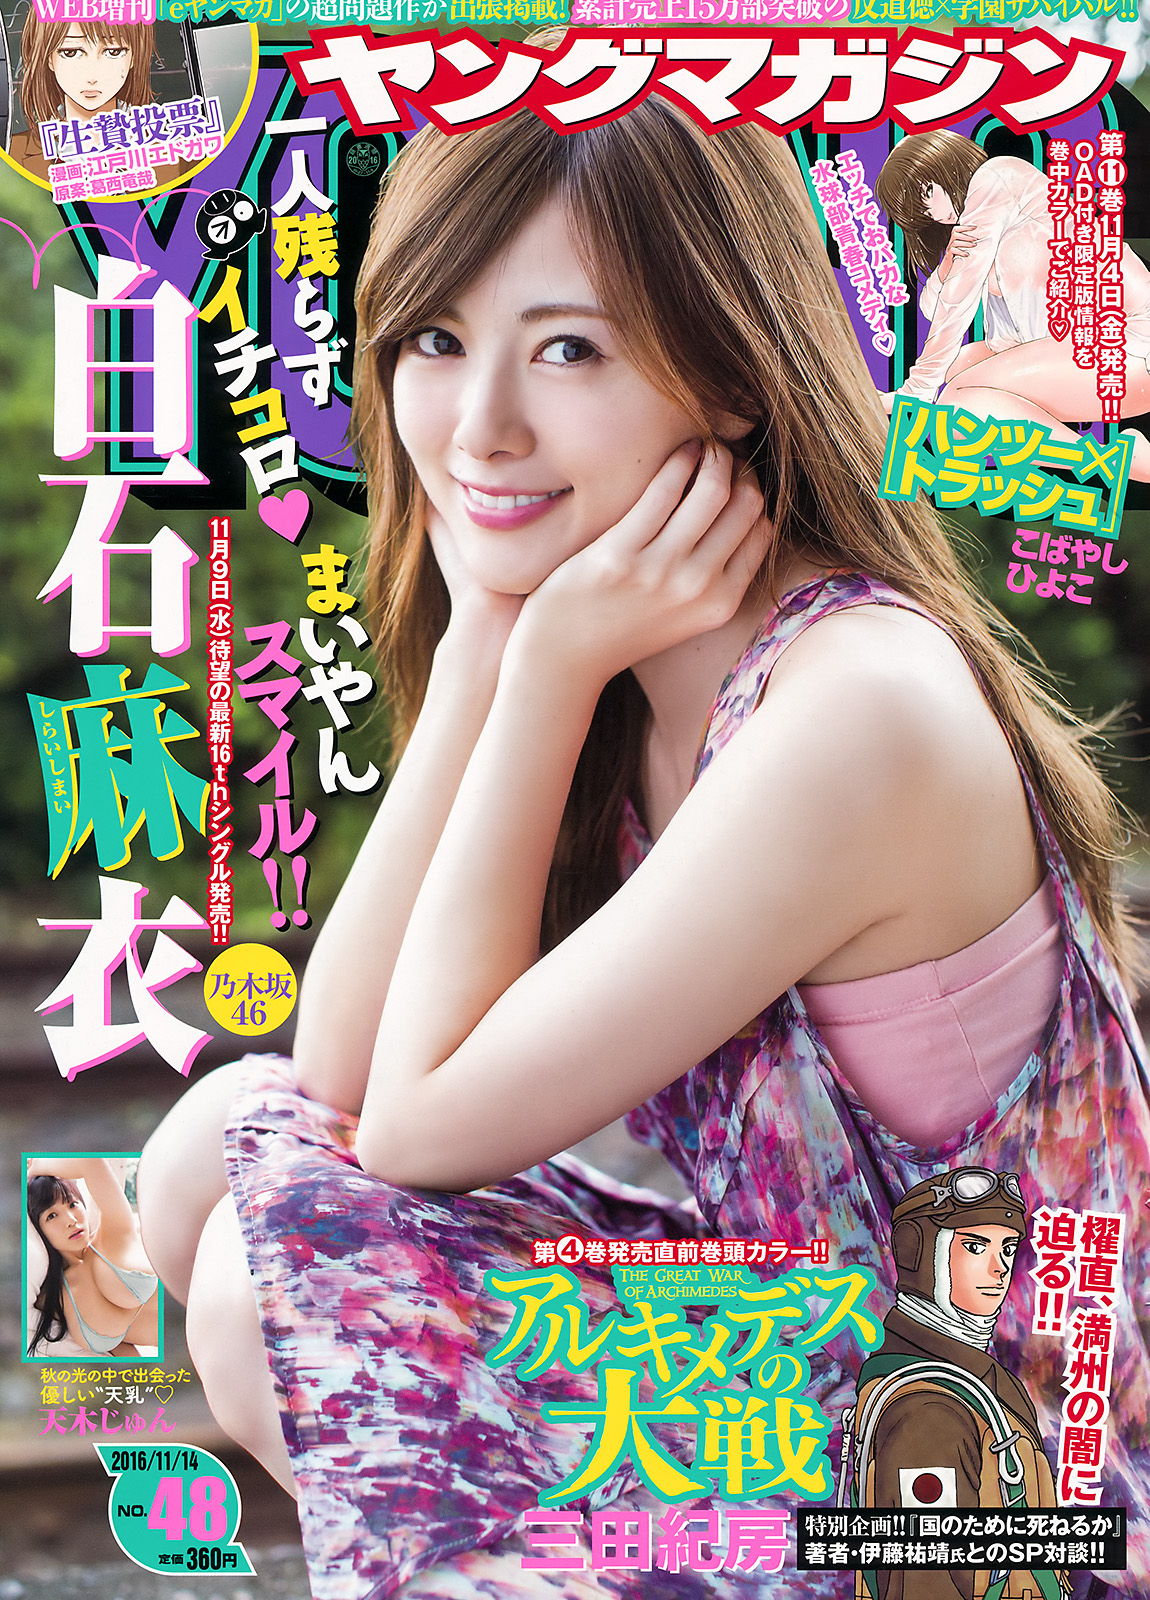 Young magazine. Журнал Майя. Makoto Shiraishi. Картинки Kohane Azusawa & an Shiraishi.